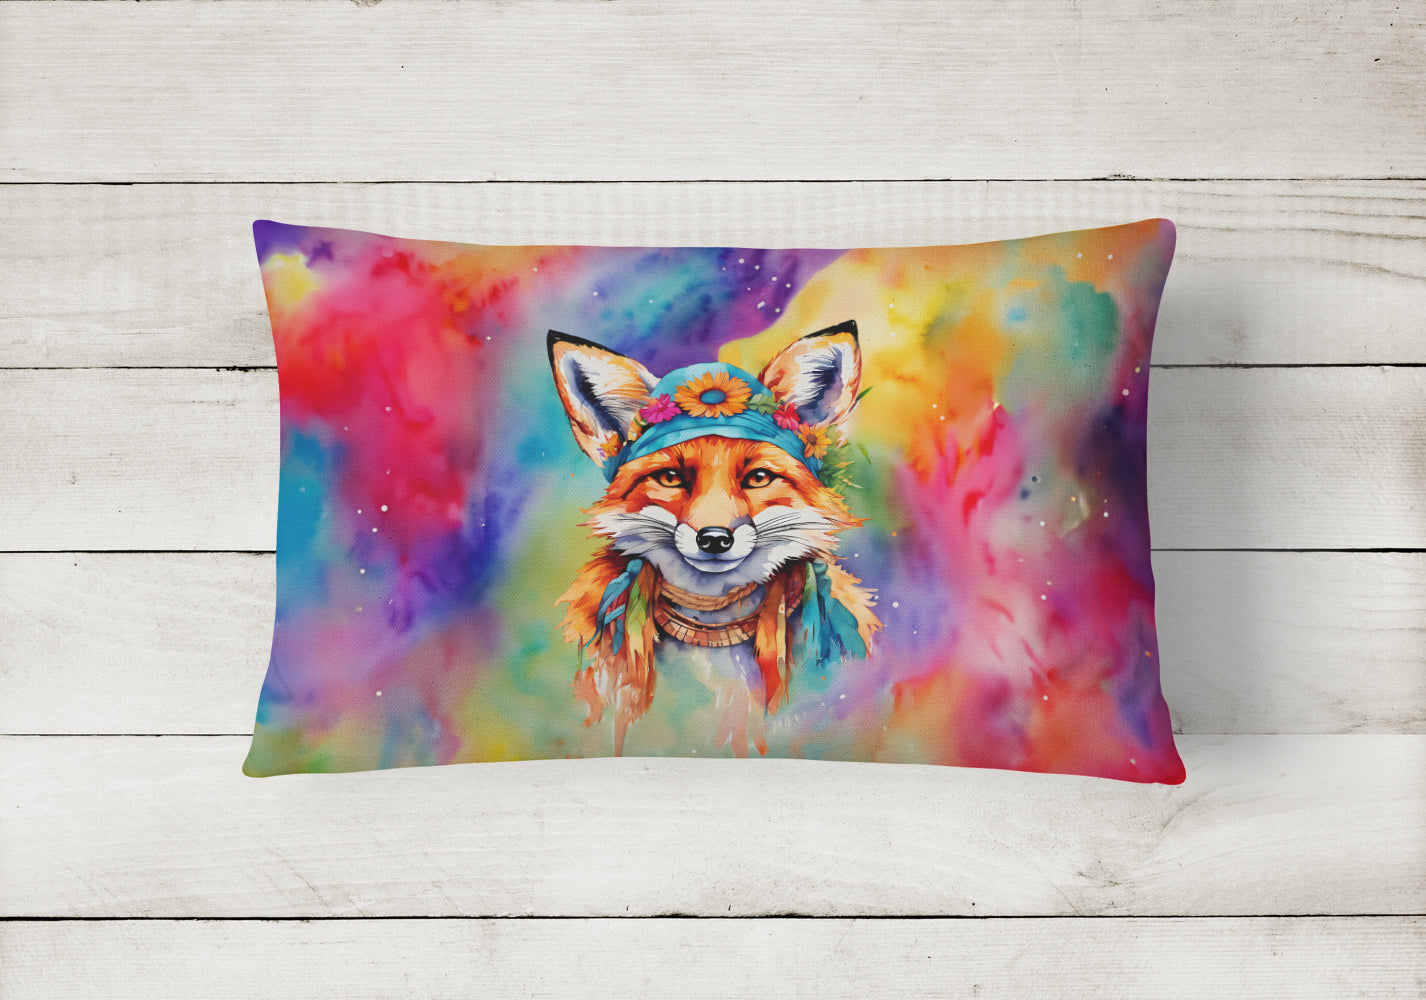 Buy this Hippie Animal Fox Throw Pillow